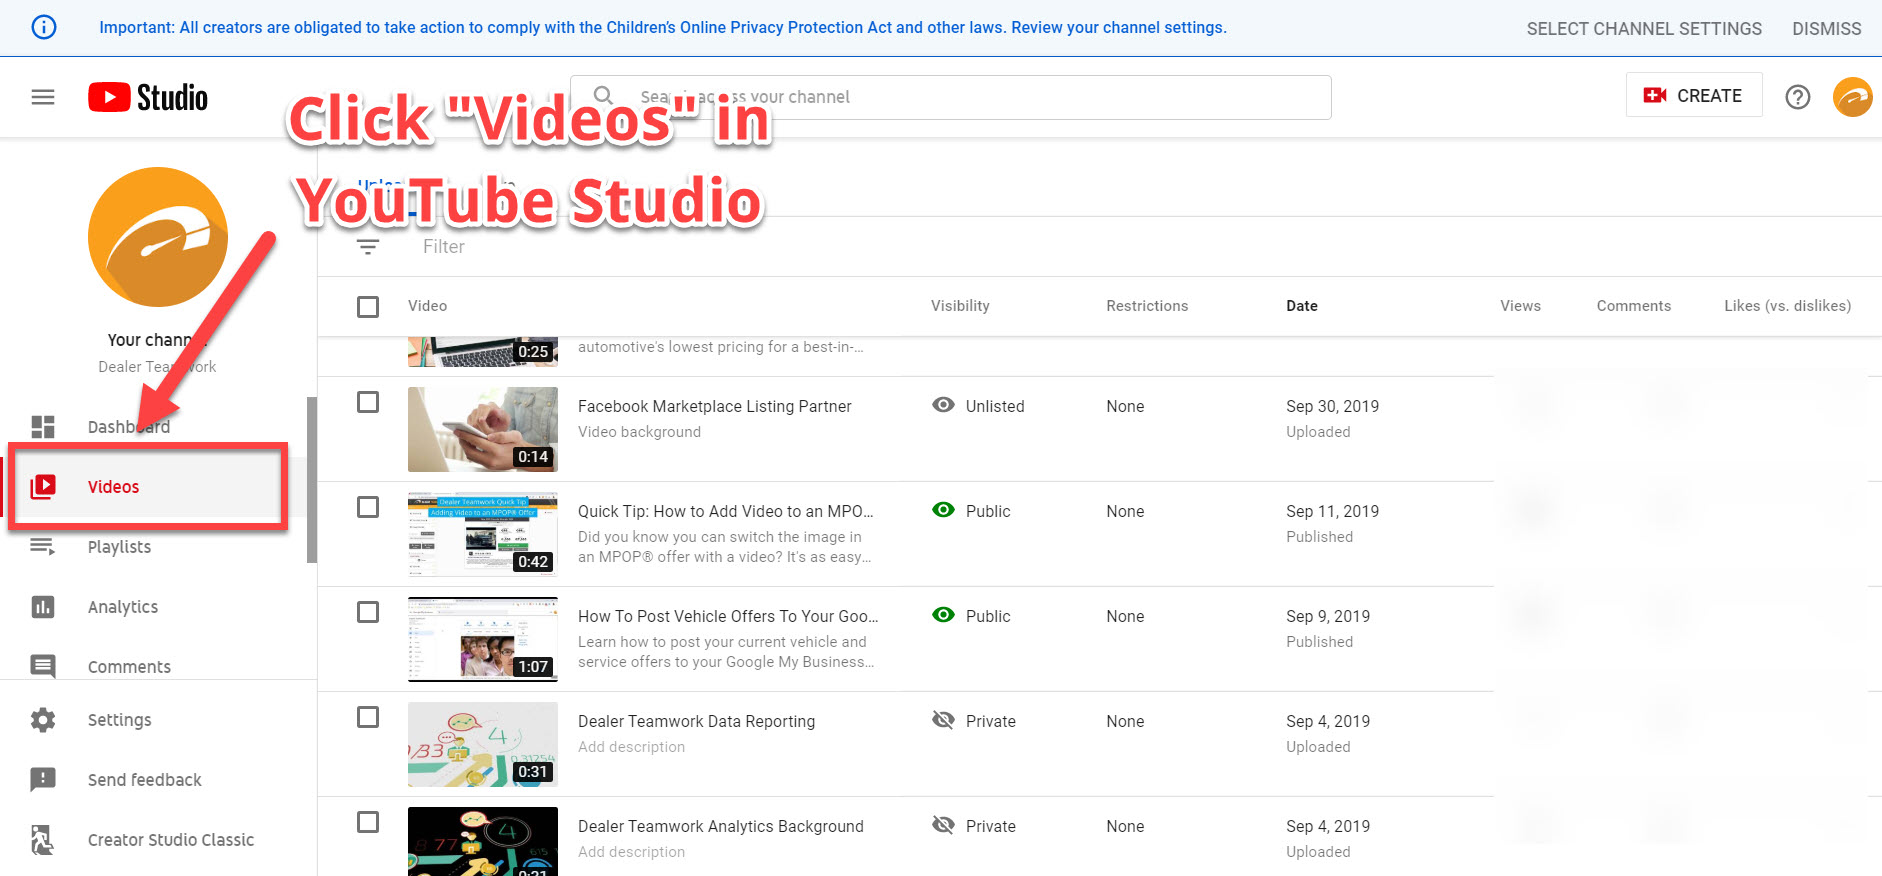 Videos - YouTube Studio - Dealer Teamwork